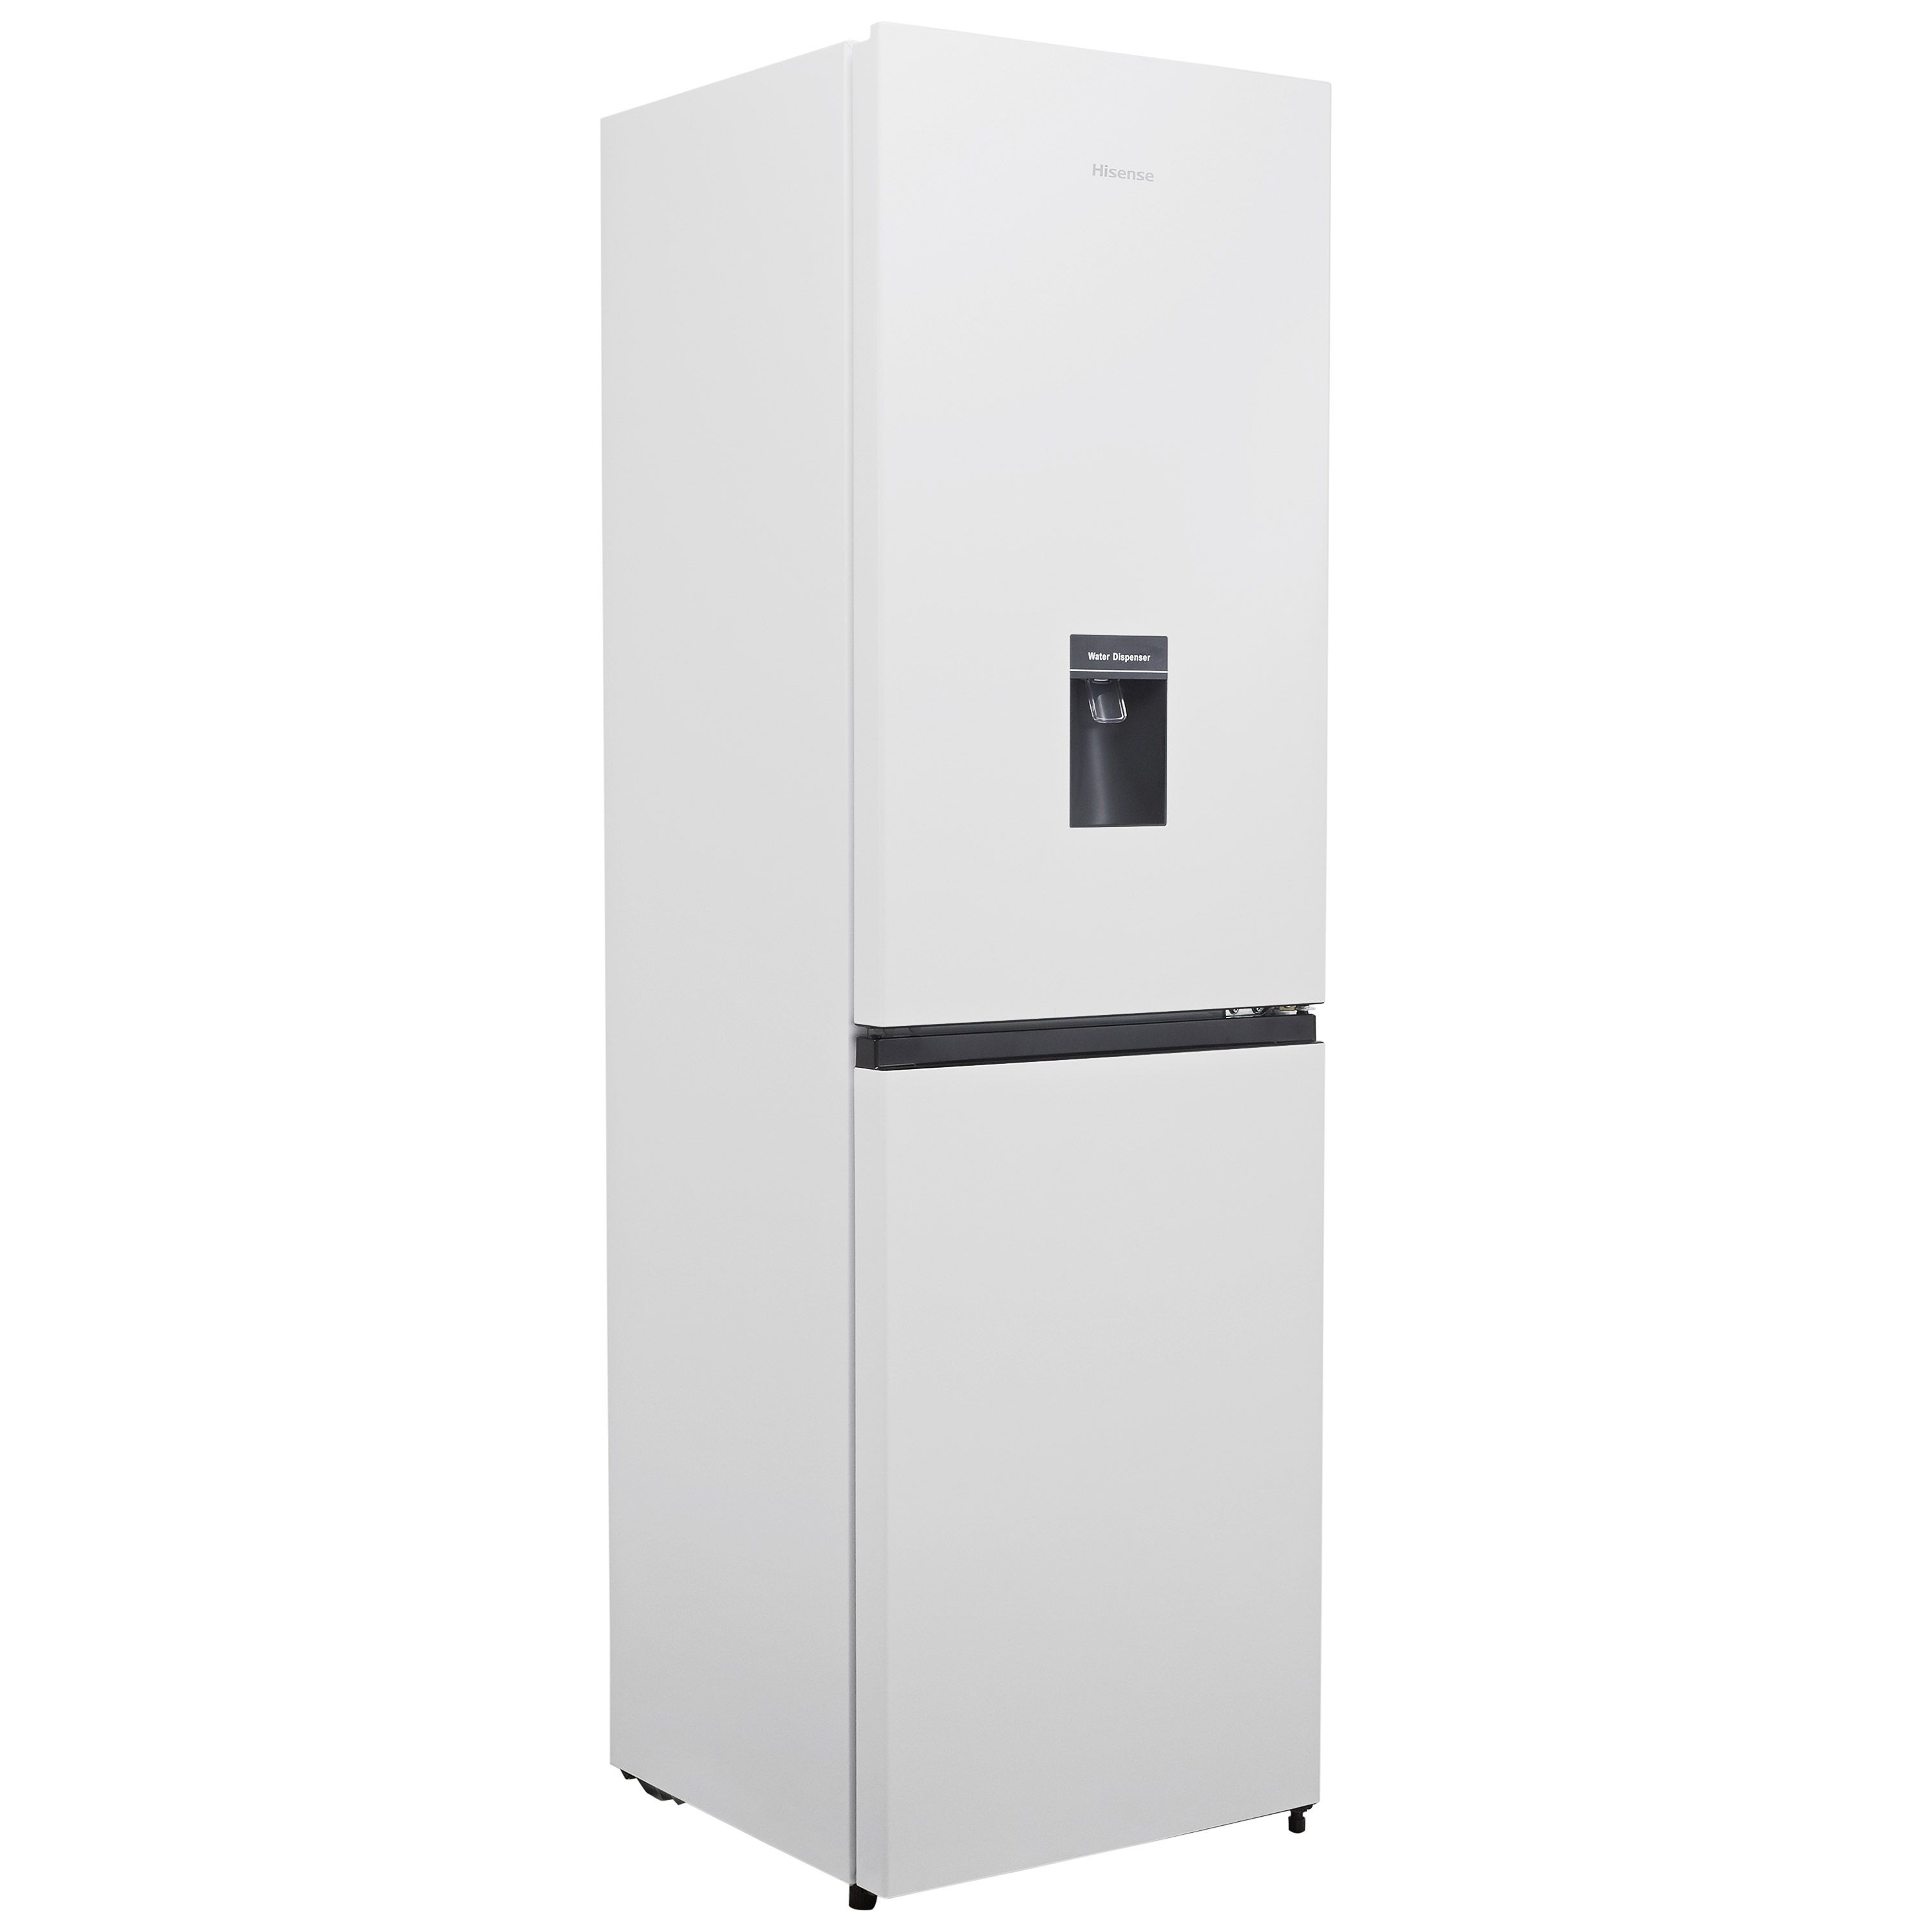 Beko BCB5050F 50:50 Integrated Frost free Fridge freezer - White